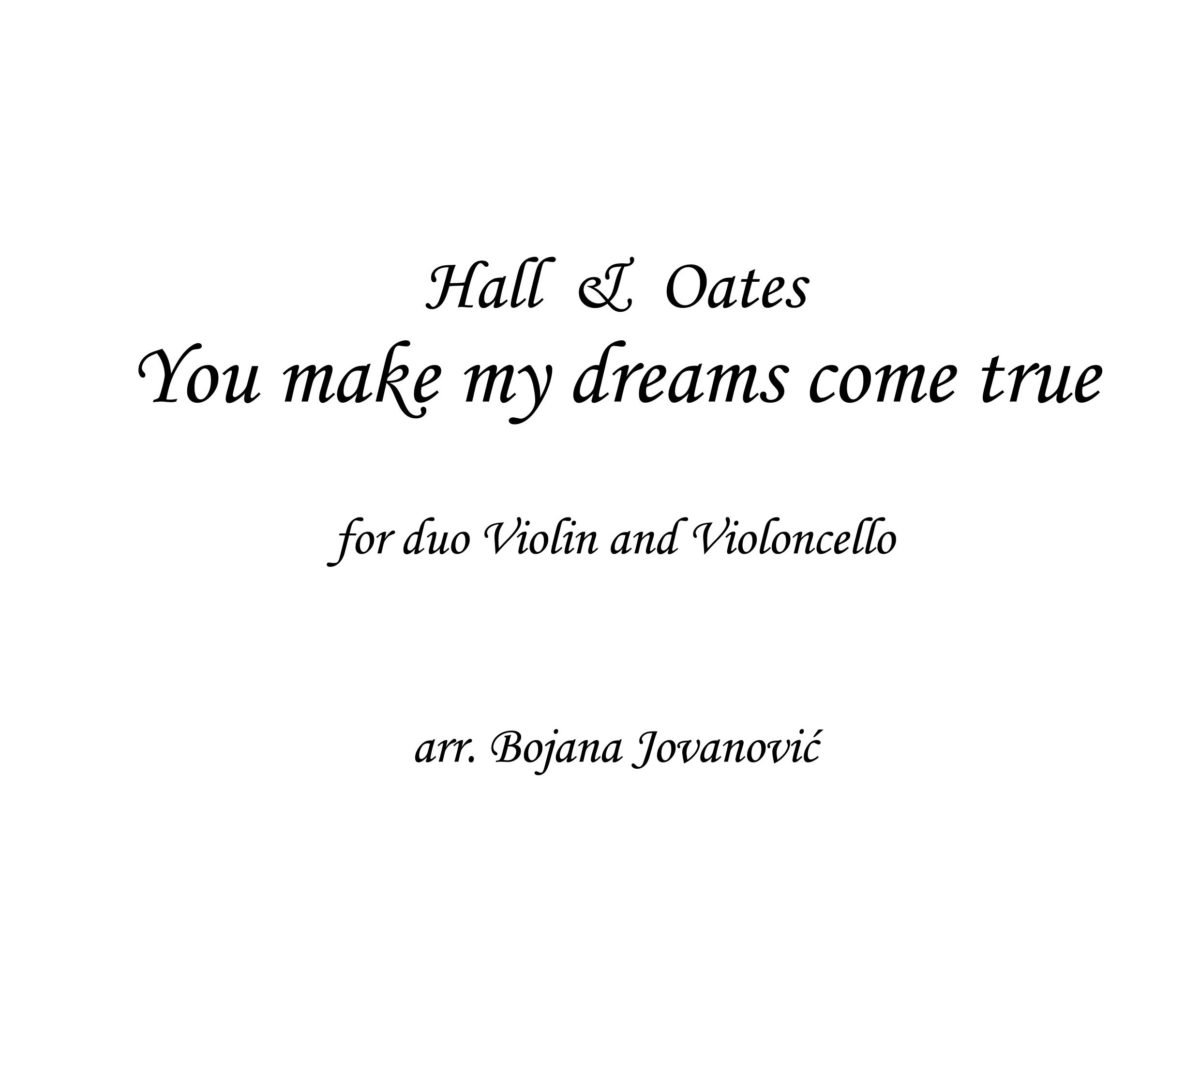 You make my dreams come true (Hall & Oates) - Sheet Music